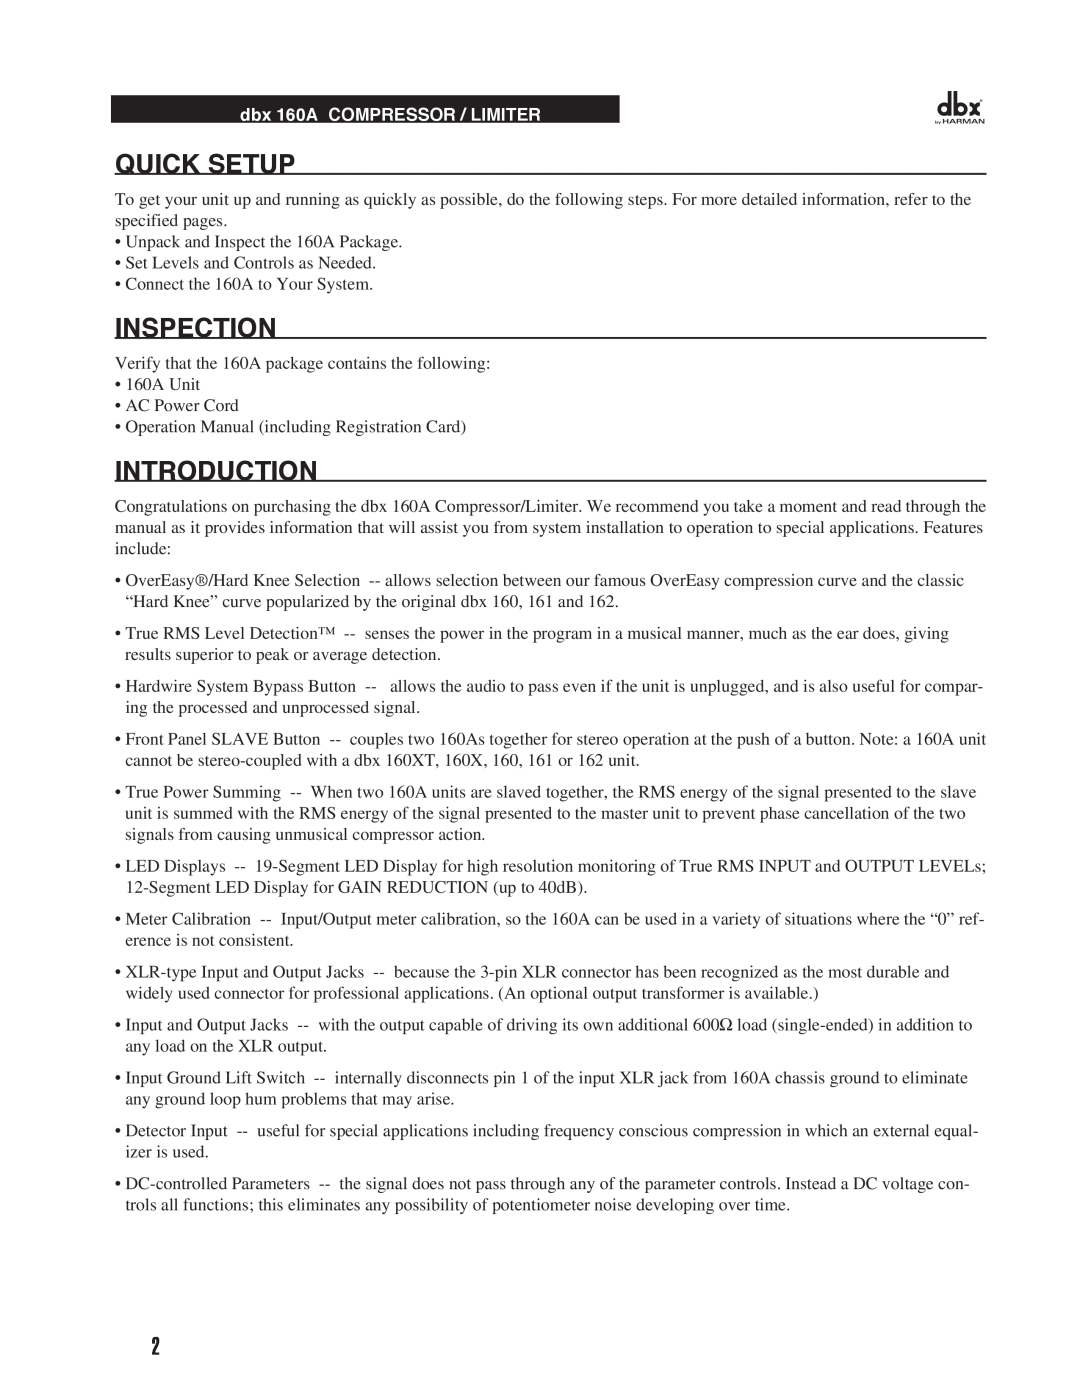 Harman manual Quick Setup, Inspection, Introduction, dbx 160A COMPRESSOR / LIMITER 